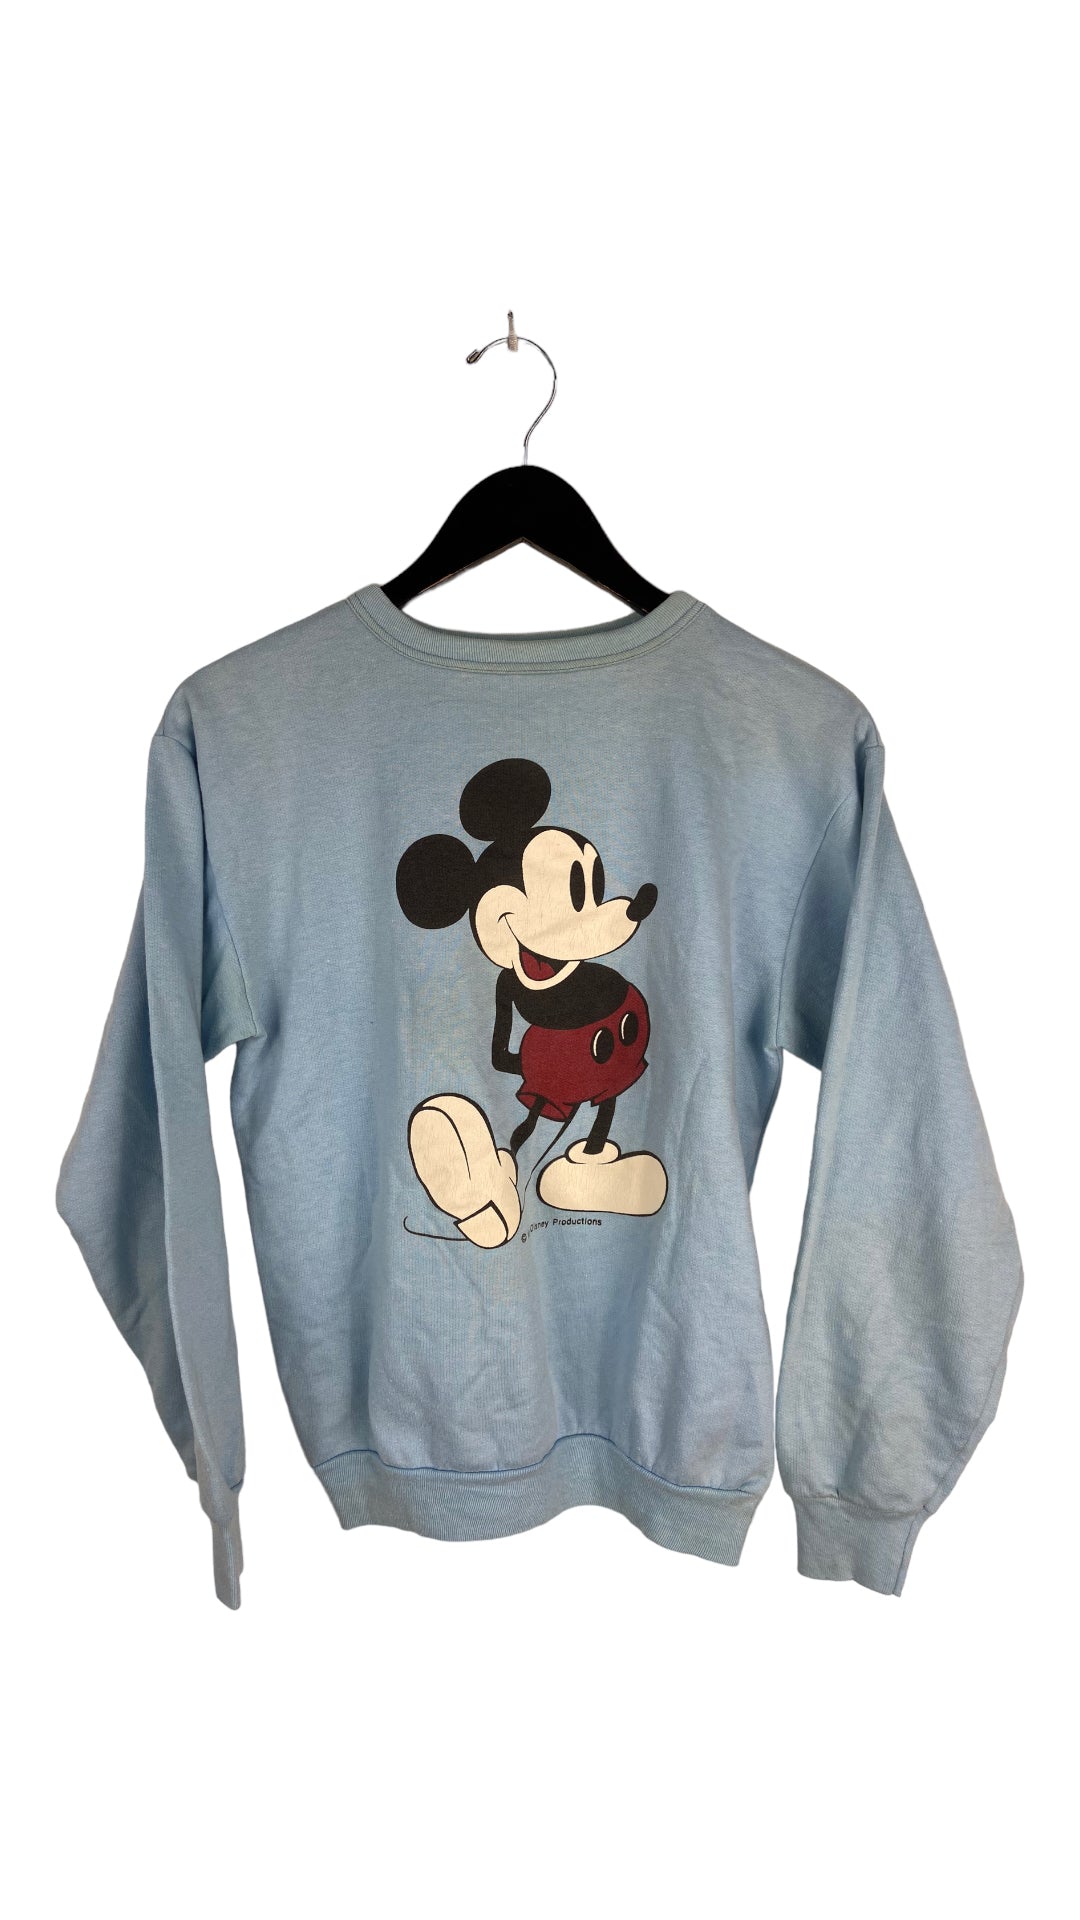 VTG Blue Mickey Mouse Crewneck Sweater Sz S